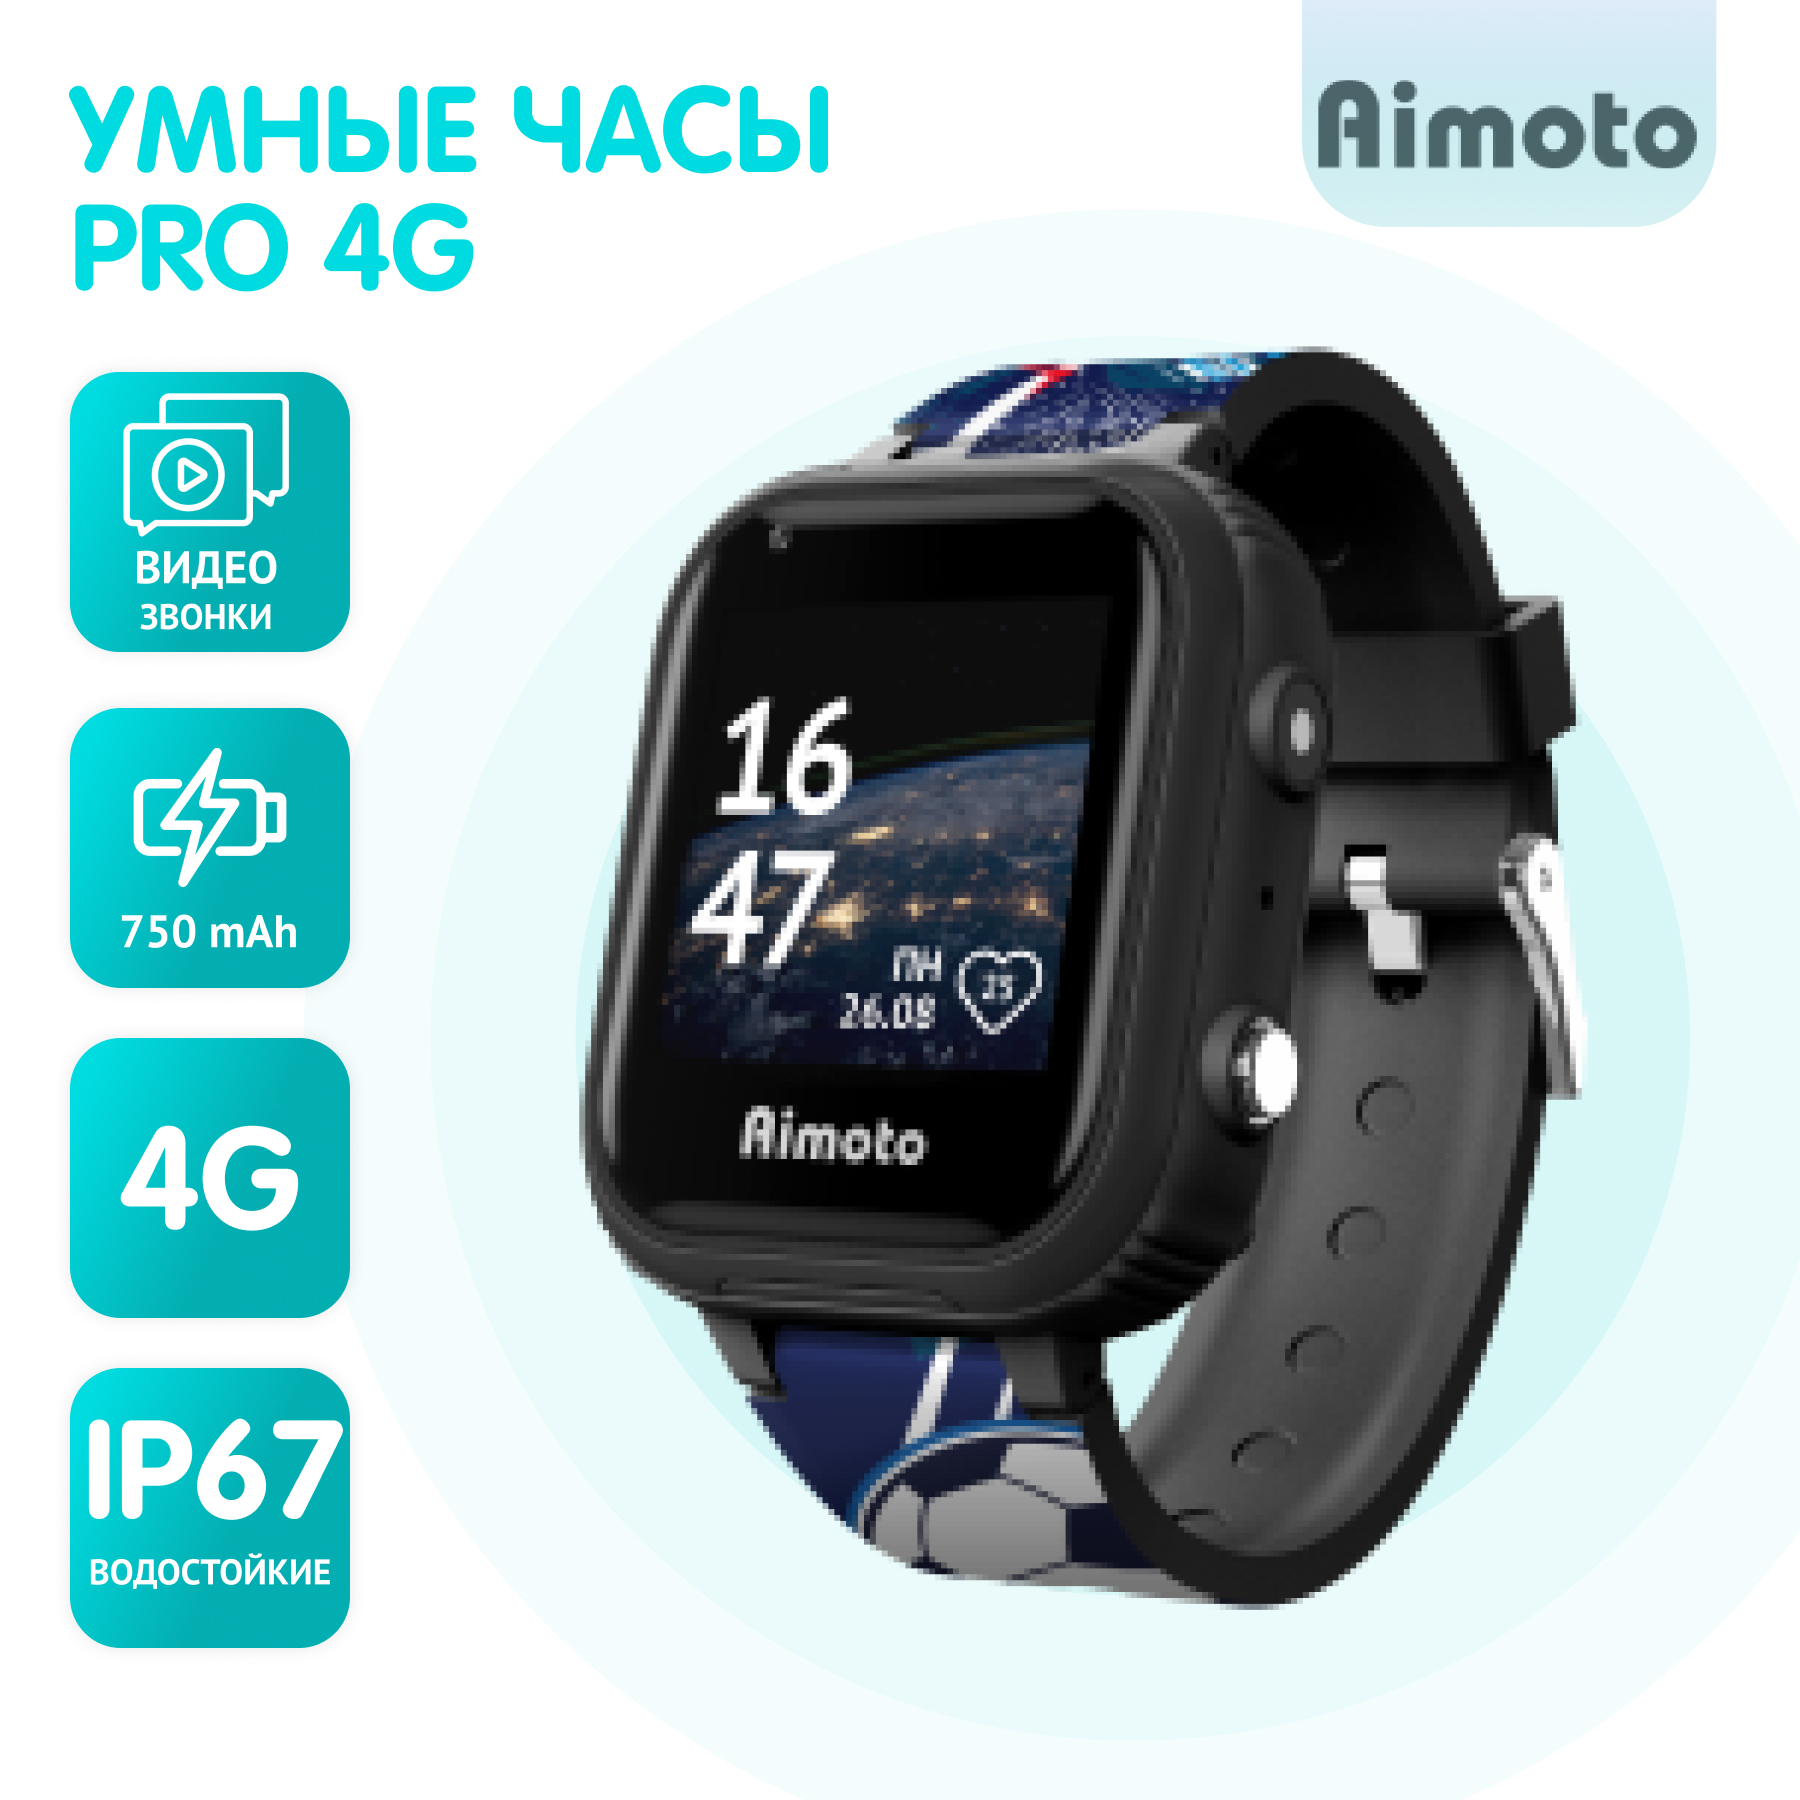 Pro indigo 4g. Часы Aimoto Pro Indigo 4g. Часы Aimoto Ocean 4g. Aimoto Pro 4g черный. Aimoto Pro Indigo 4g черные.